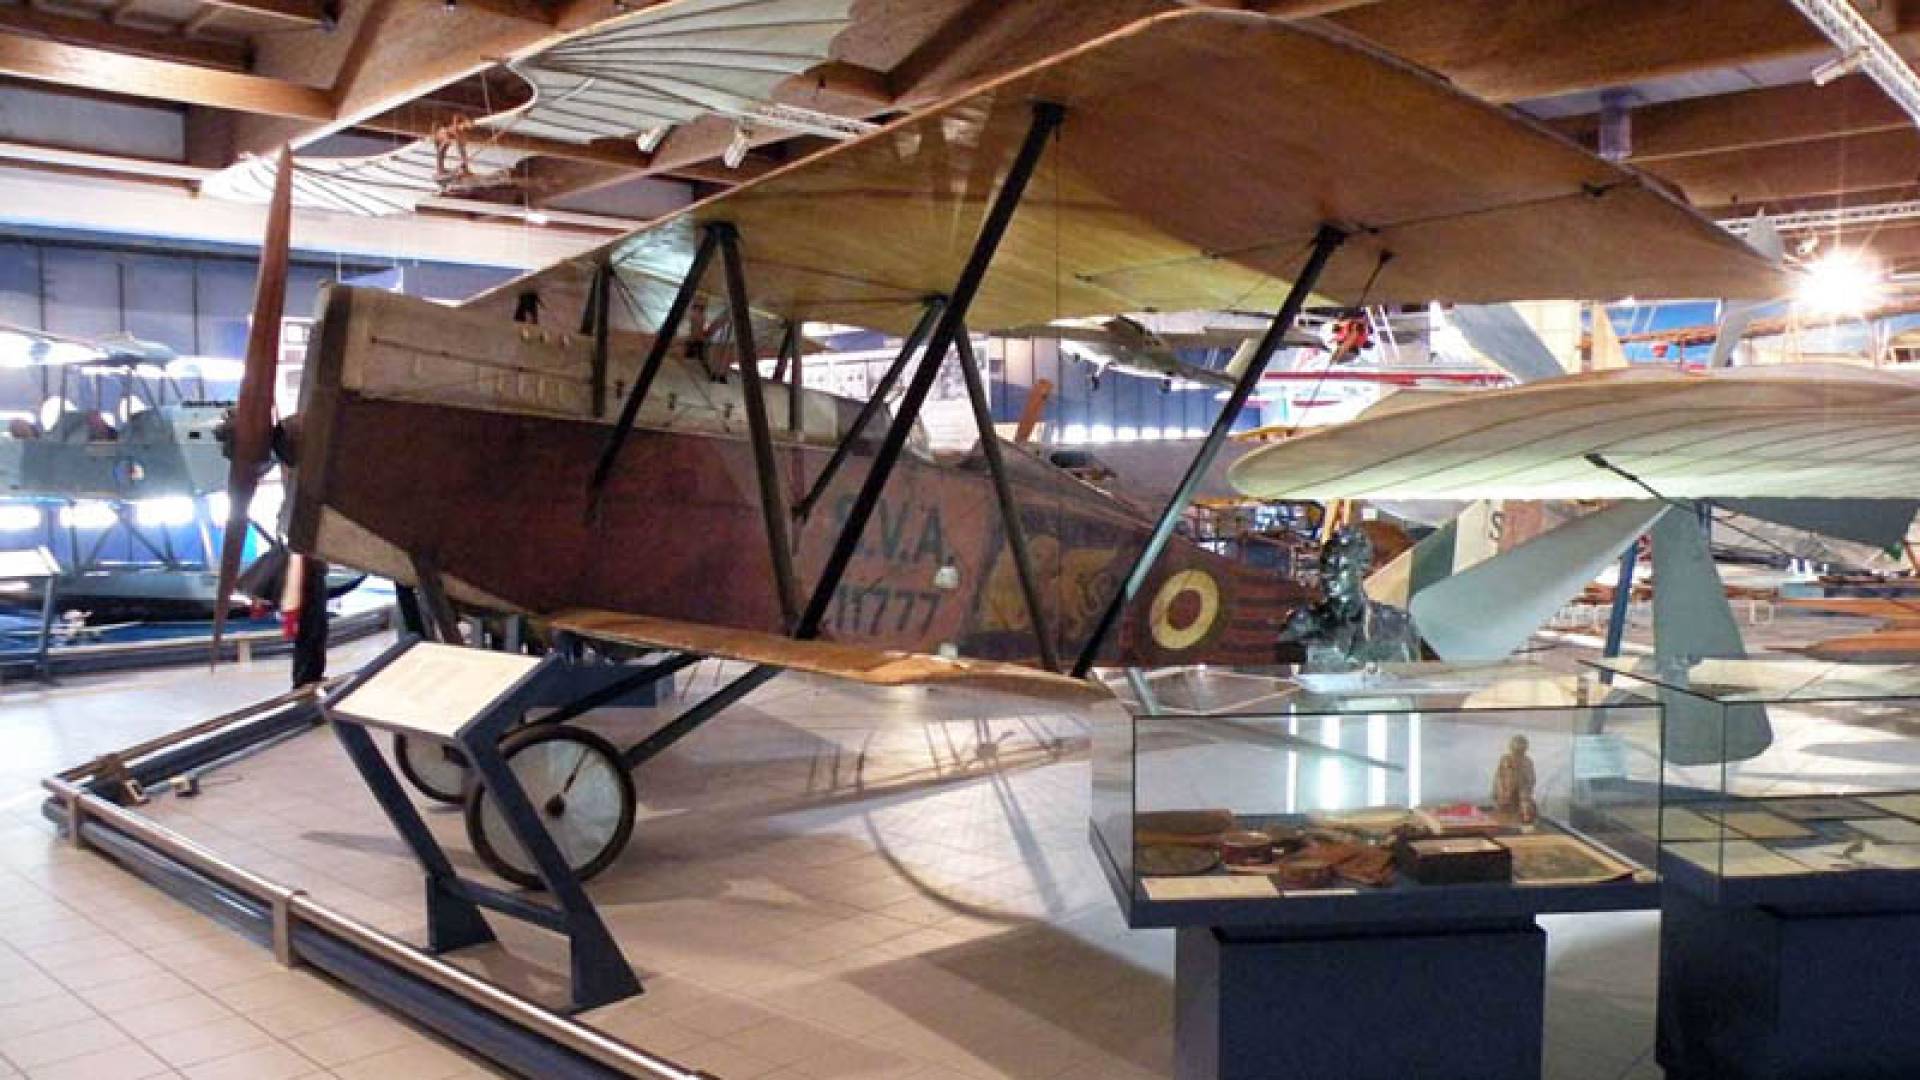 LUFTFAHRTMUSEUM, Luftfahrtmuseum Gianni Caproni